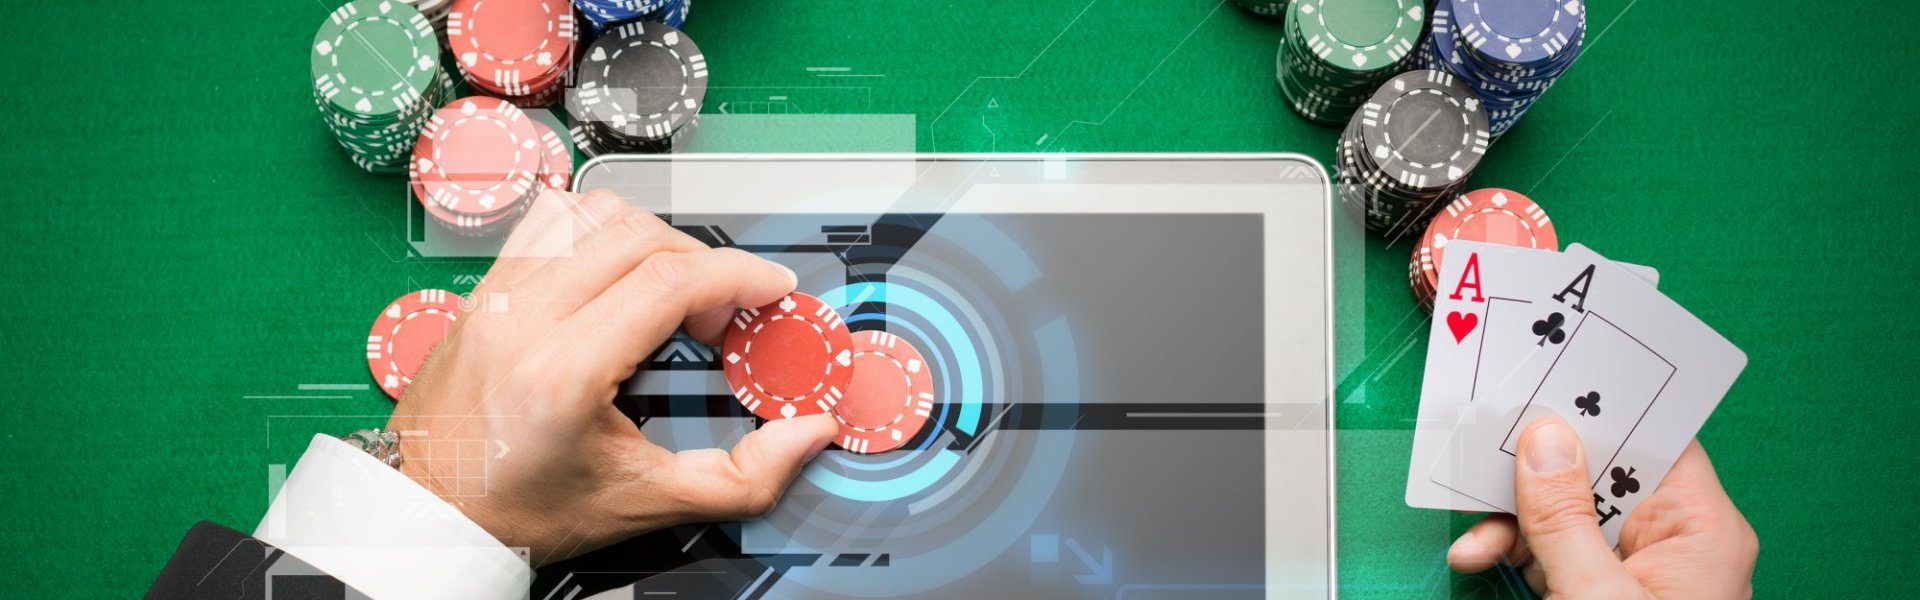 Is Online Casino Making Me Wealthy